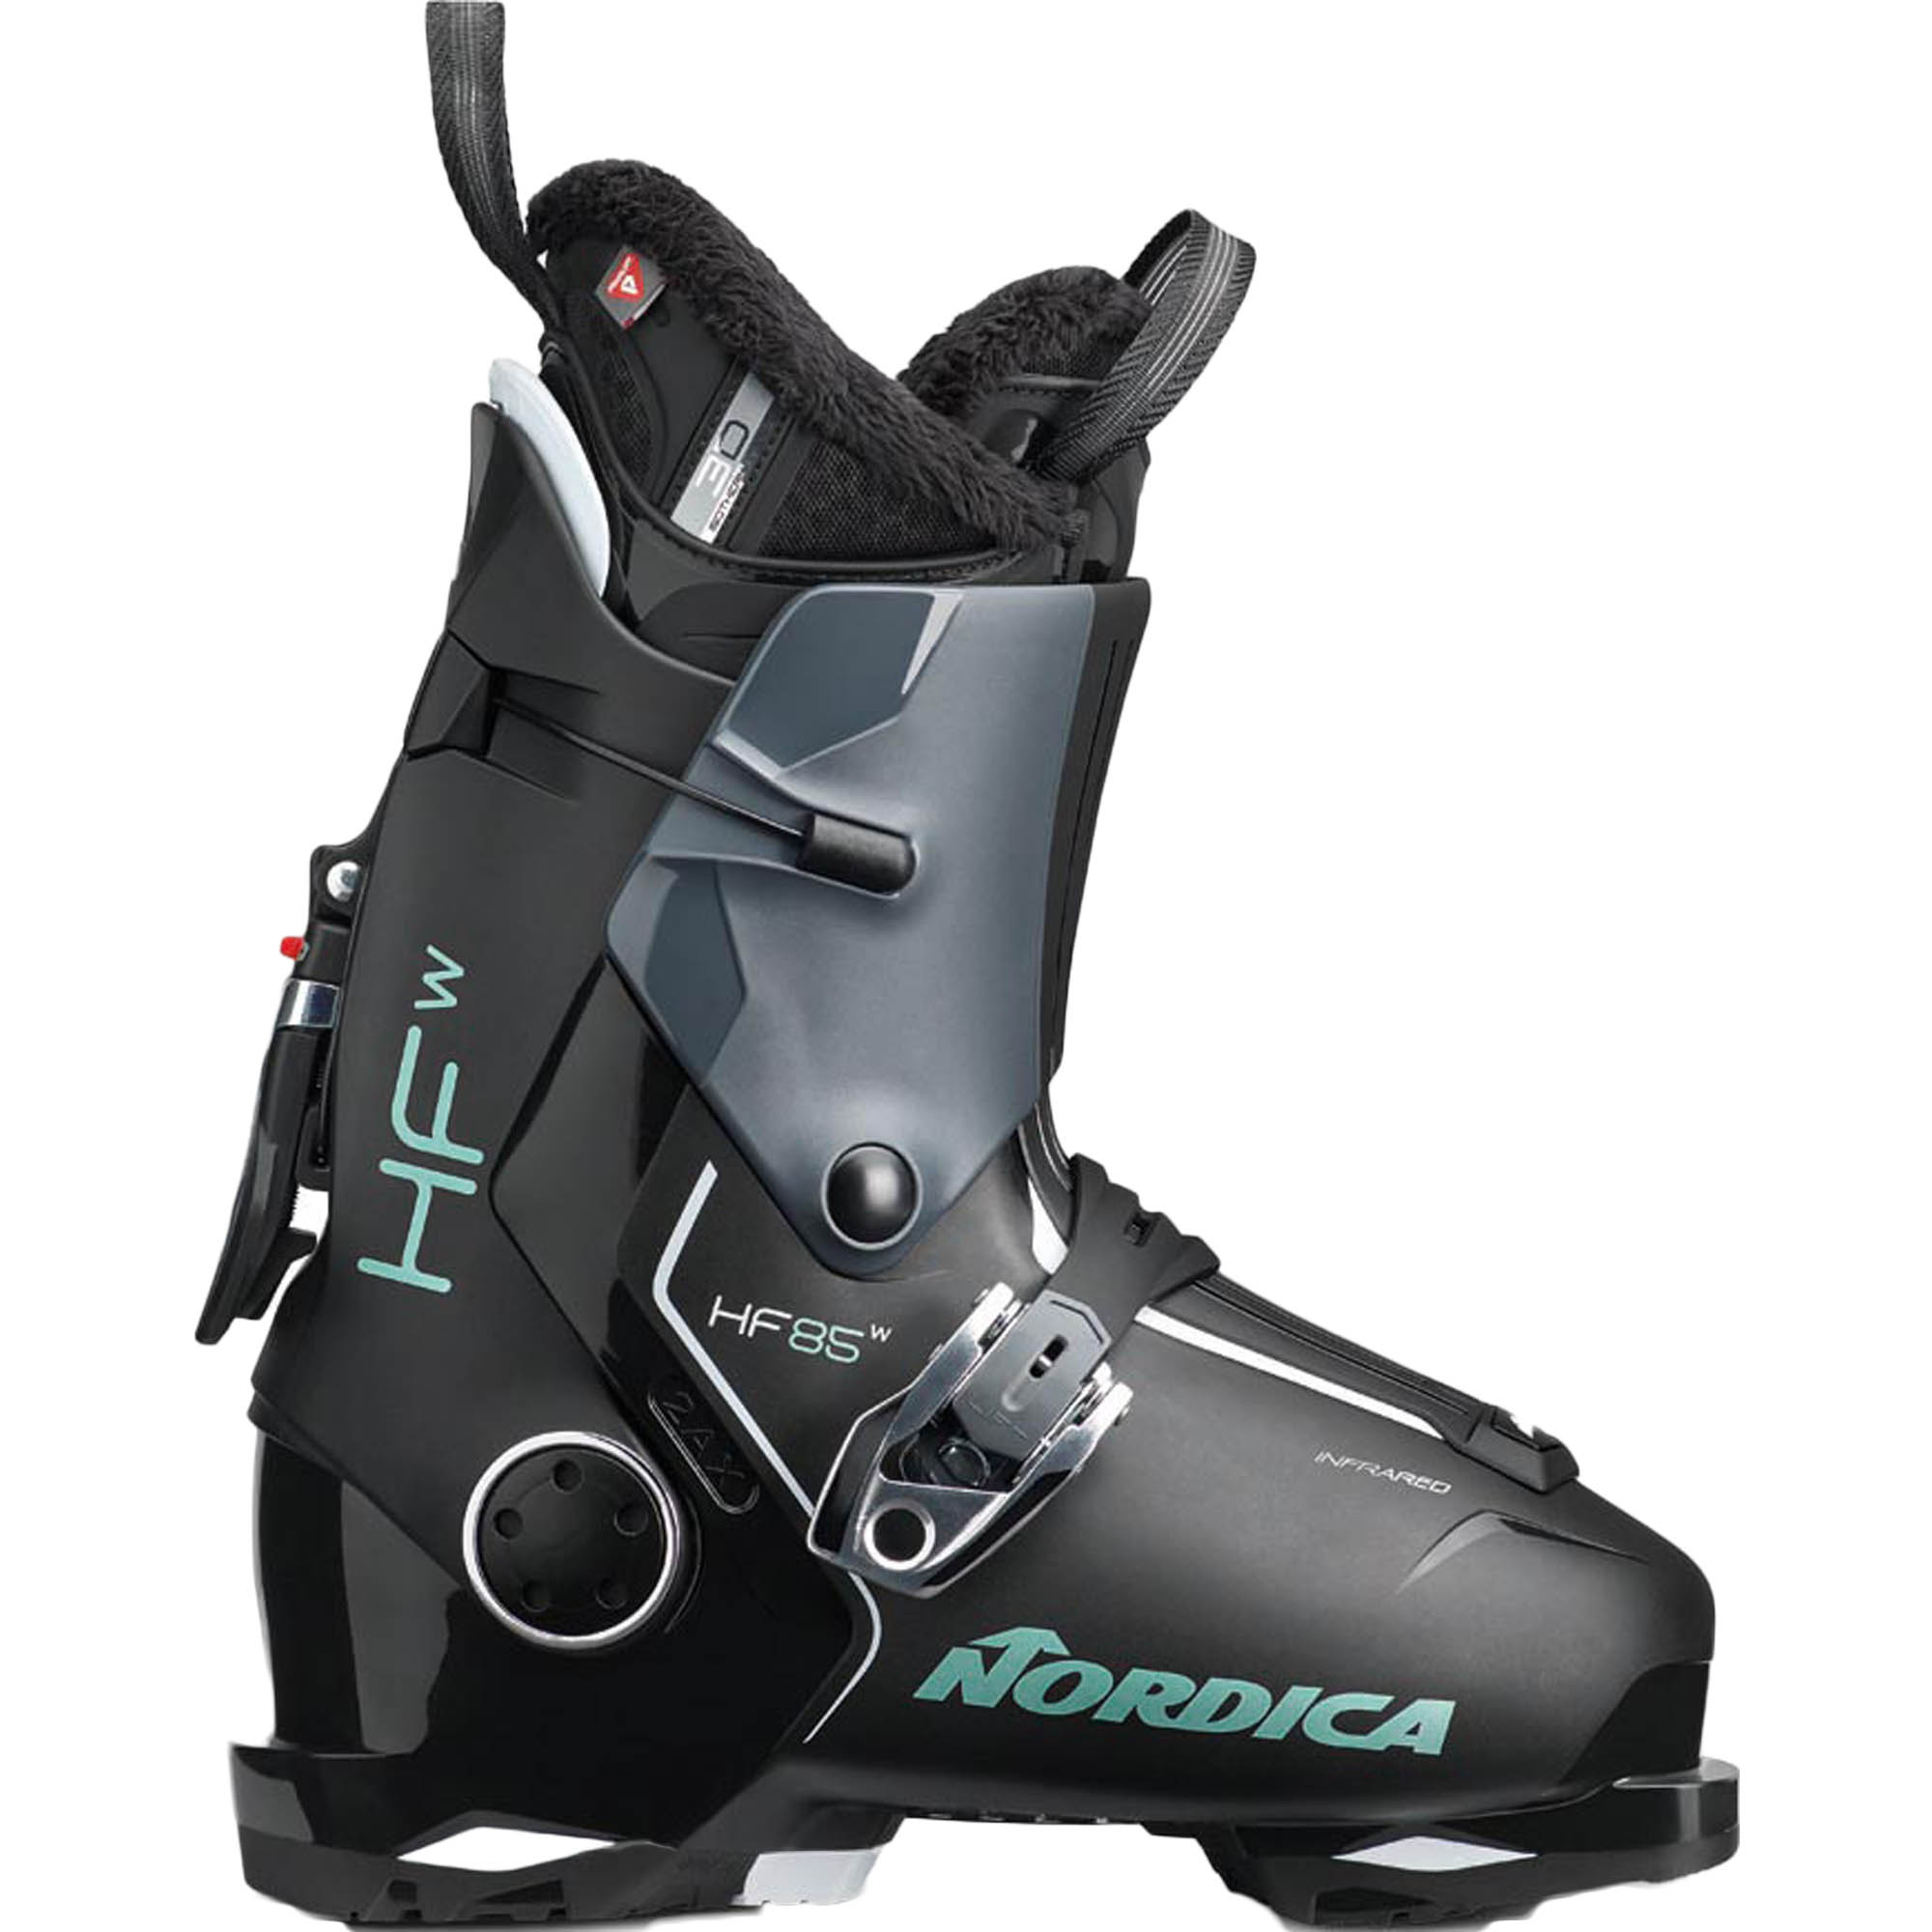 Nordica HF 85 W Women's Ski Boots